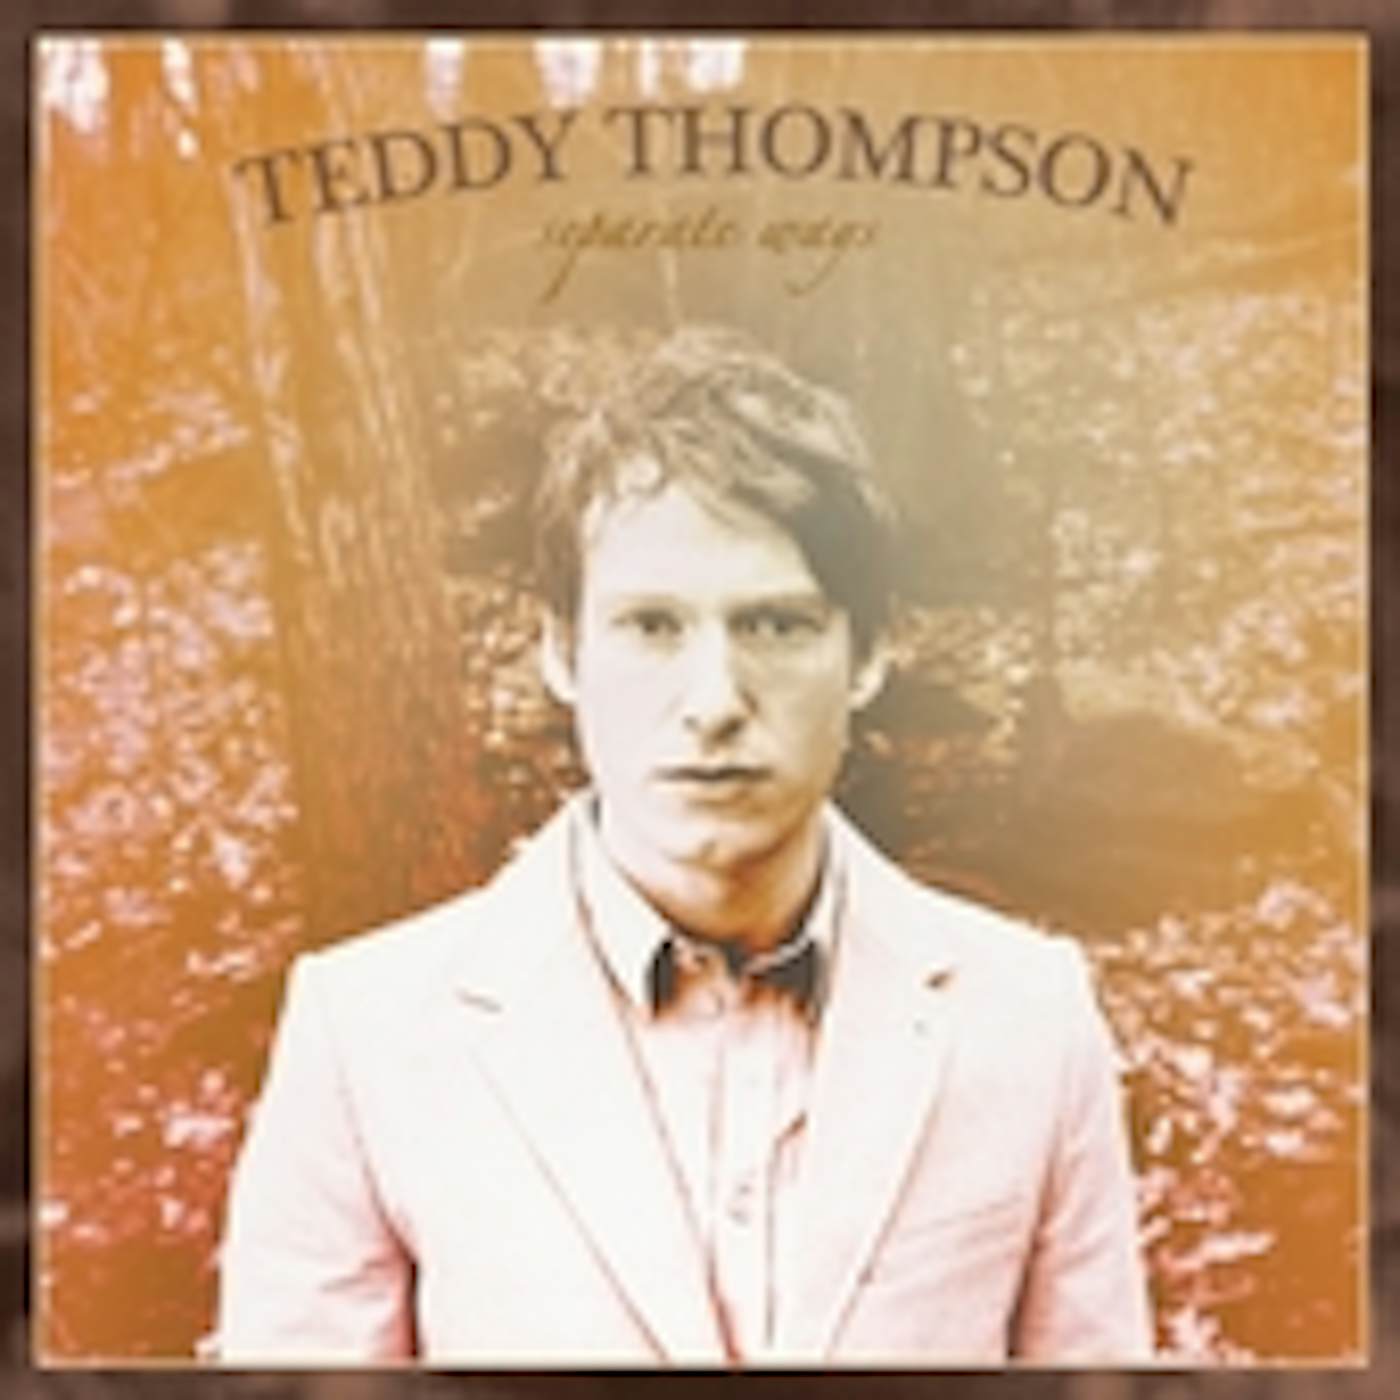 Teddy Thompson SEPARATE WAYS CD